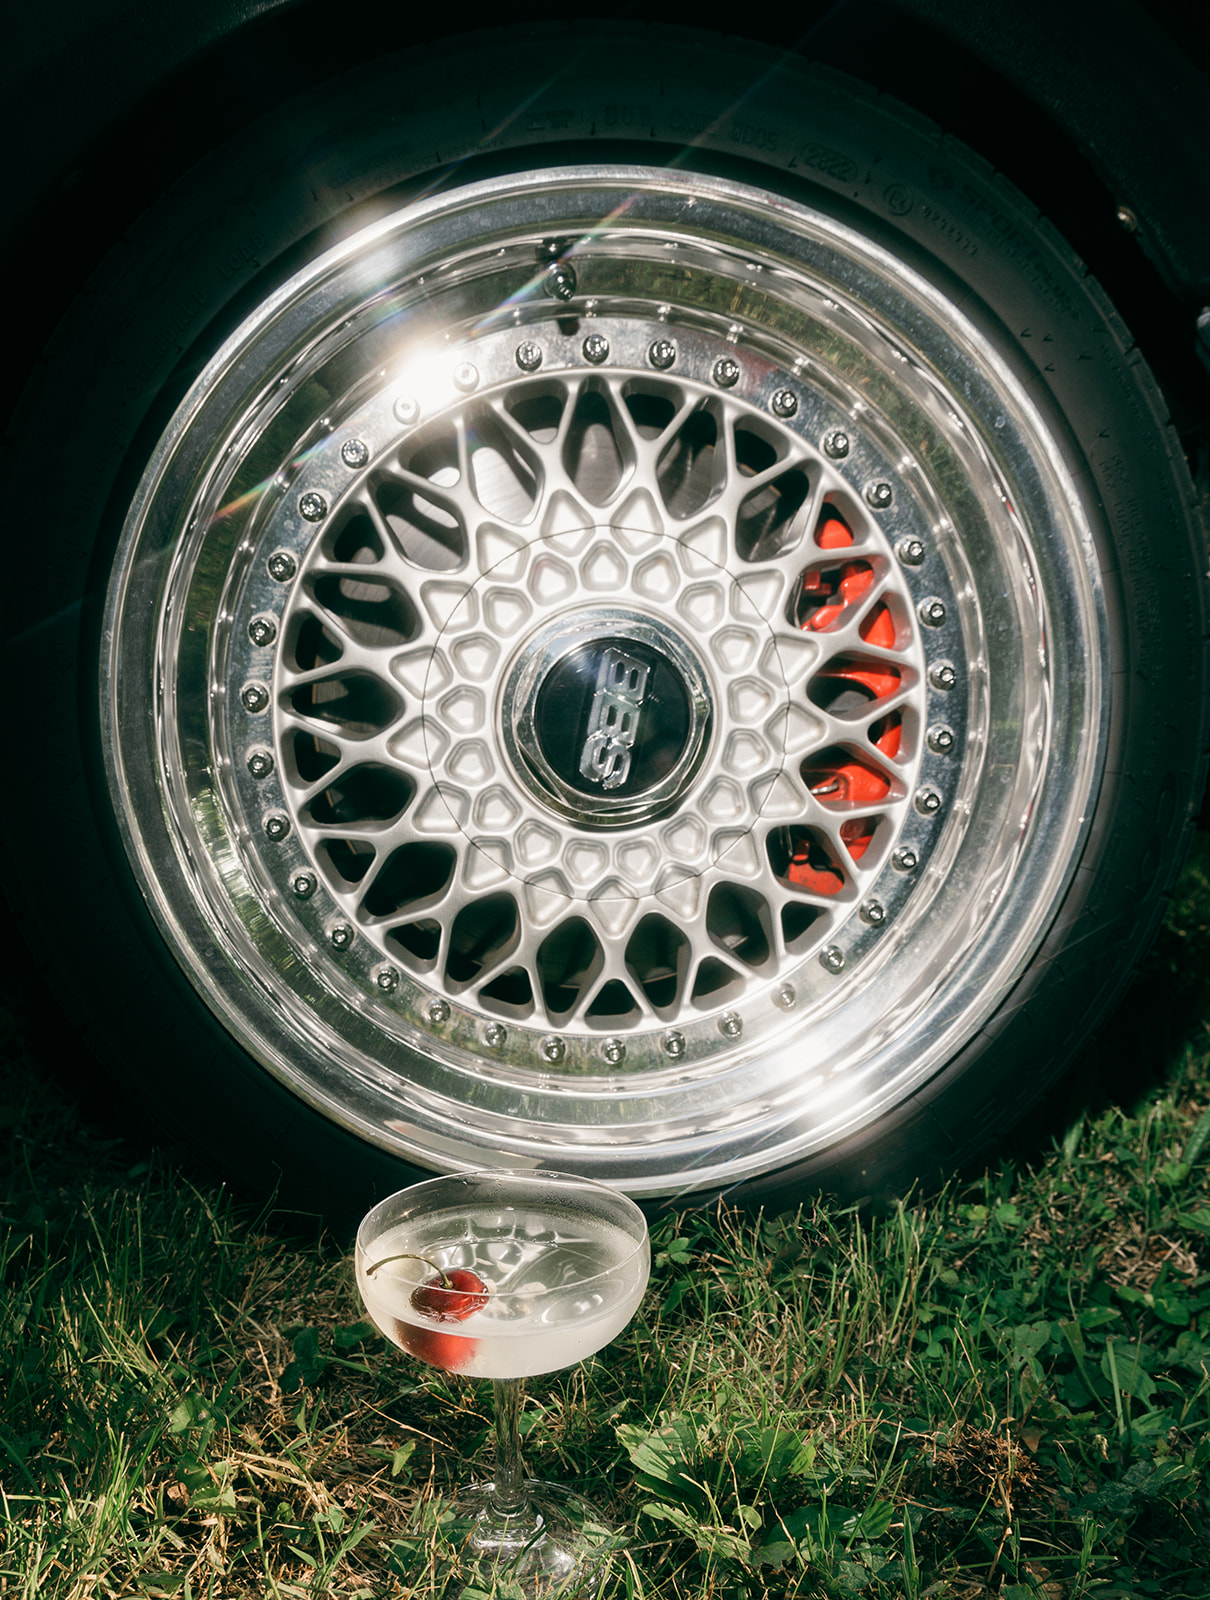 Cherry martini red brake calipers and BBS wheels